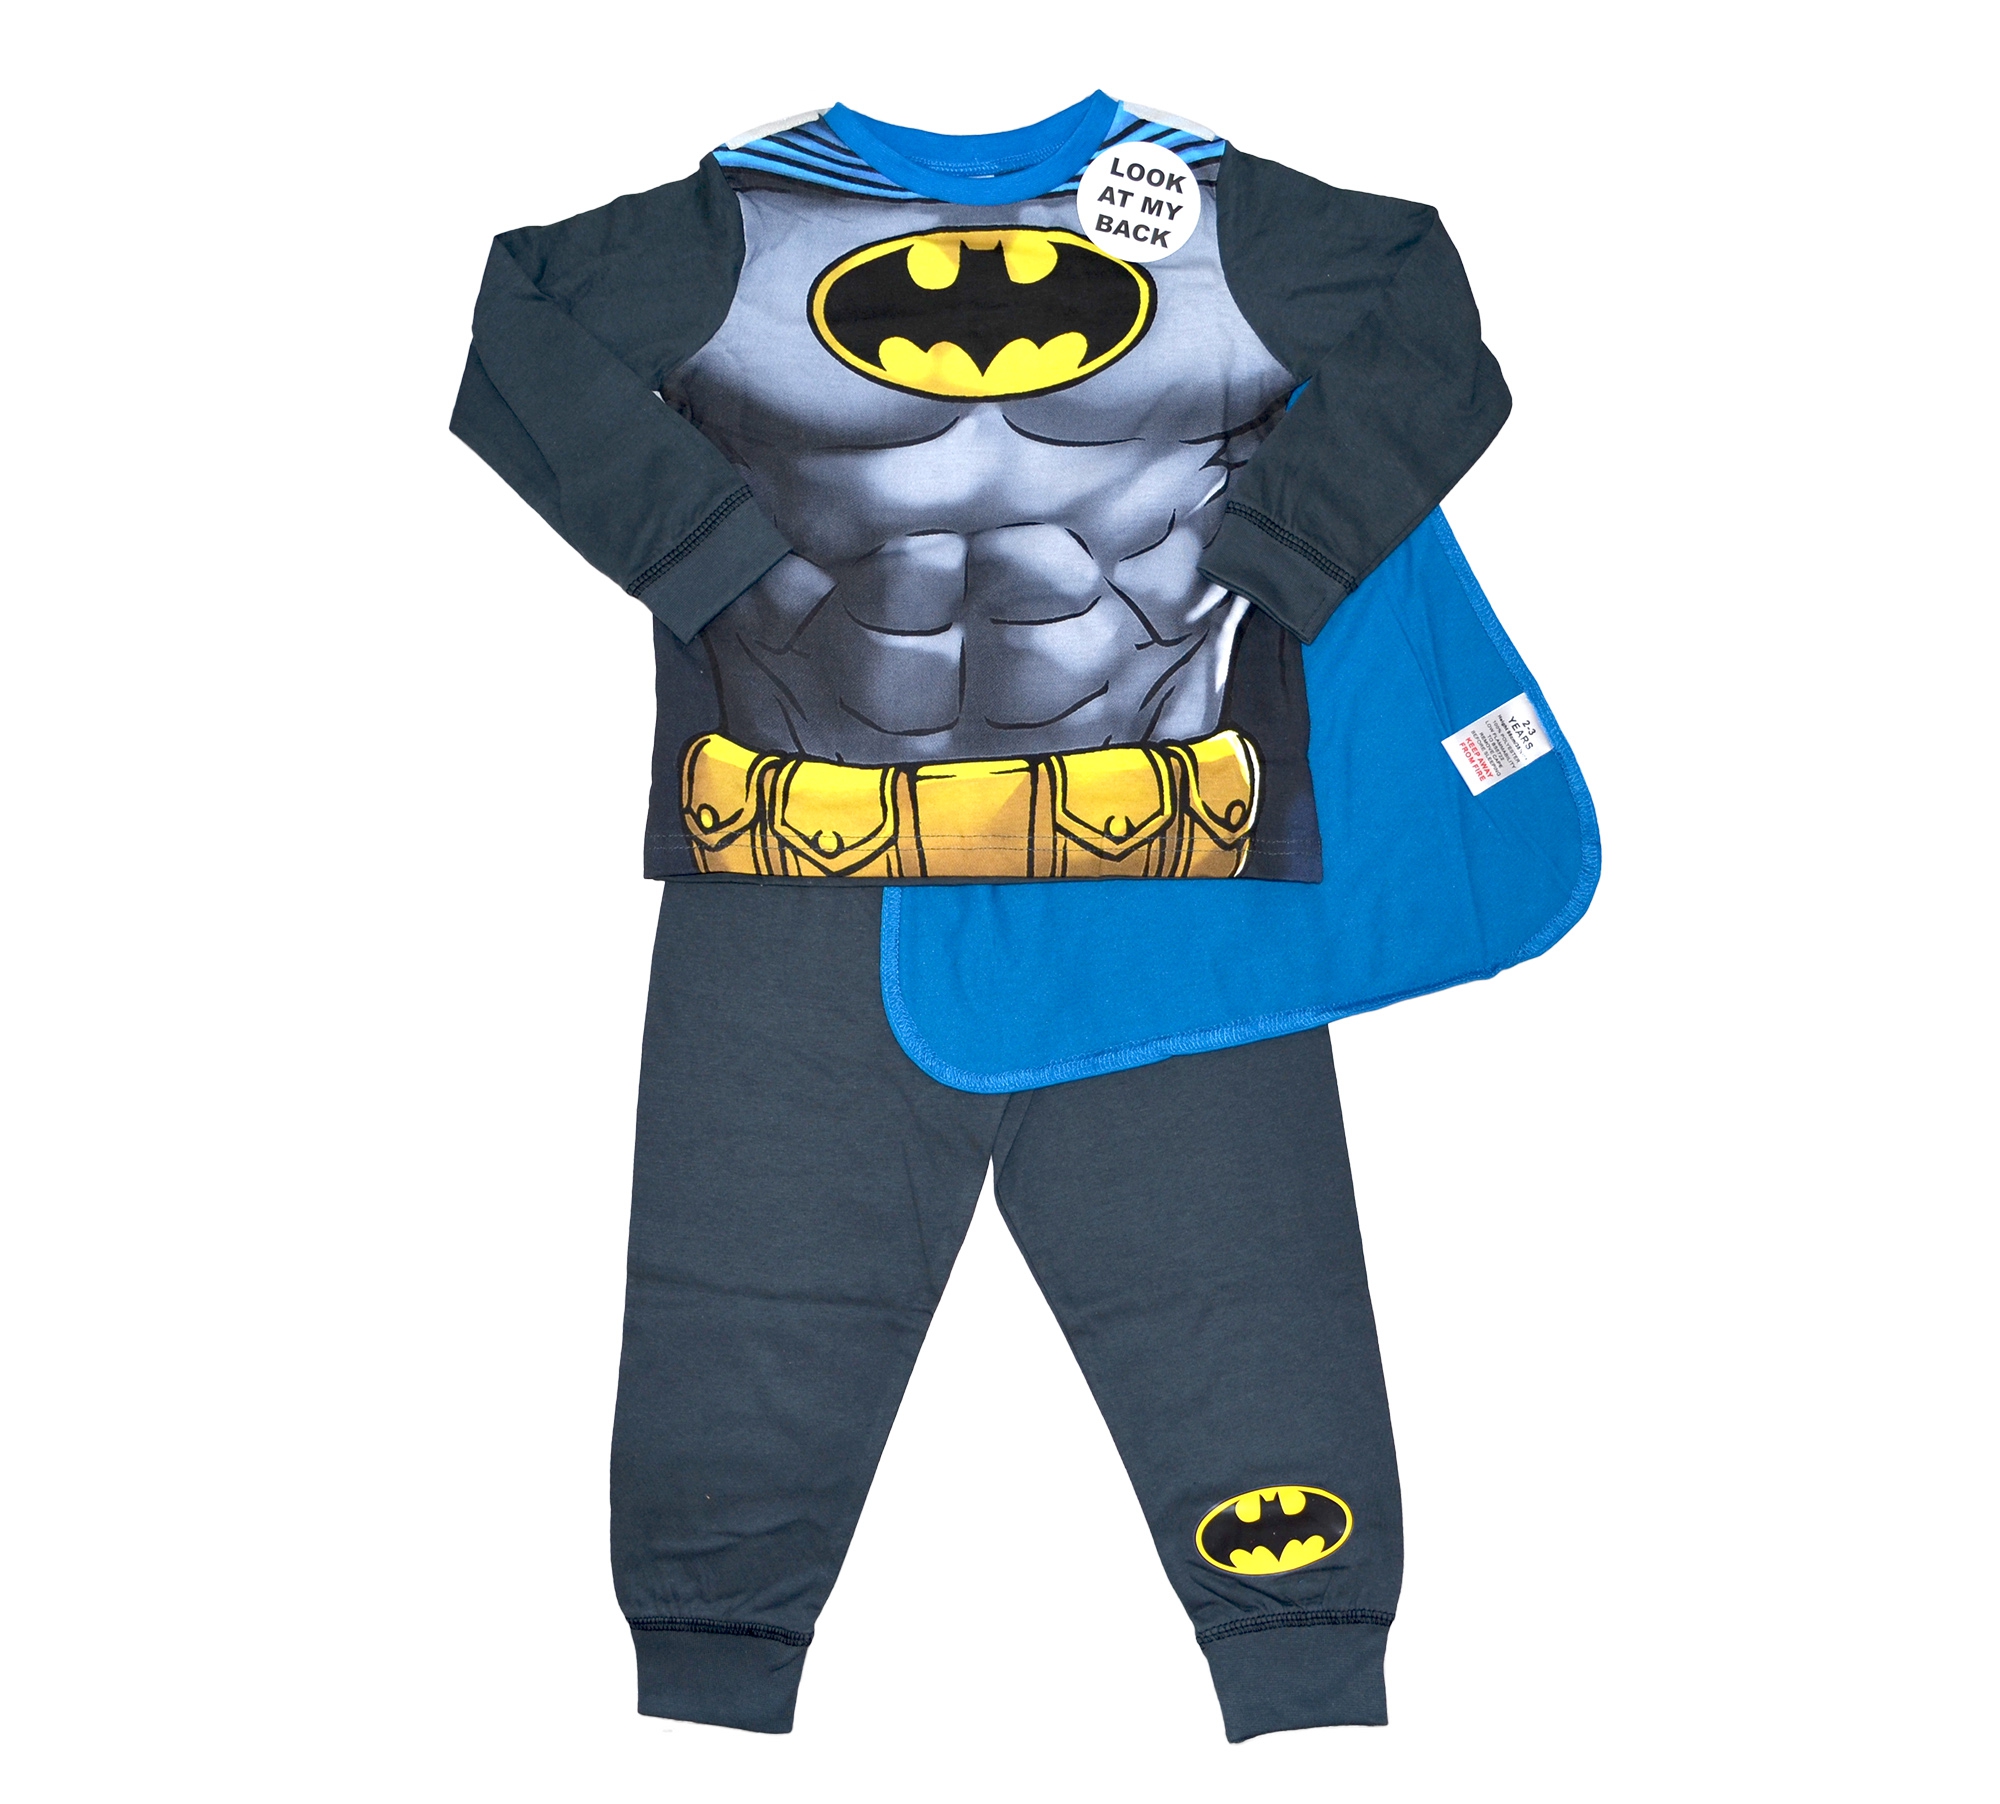 Batman 'Knight' Boys Novelty Pyjama Set 3-4 Years